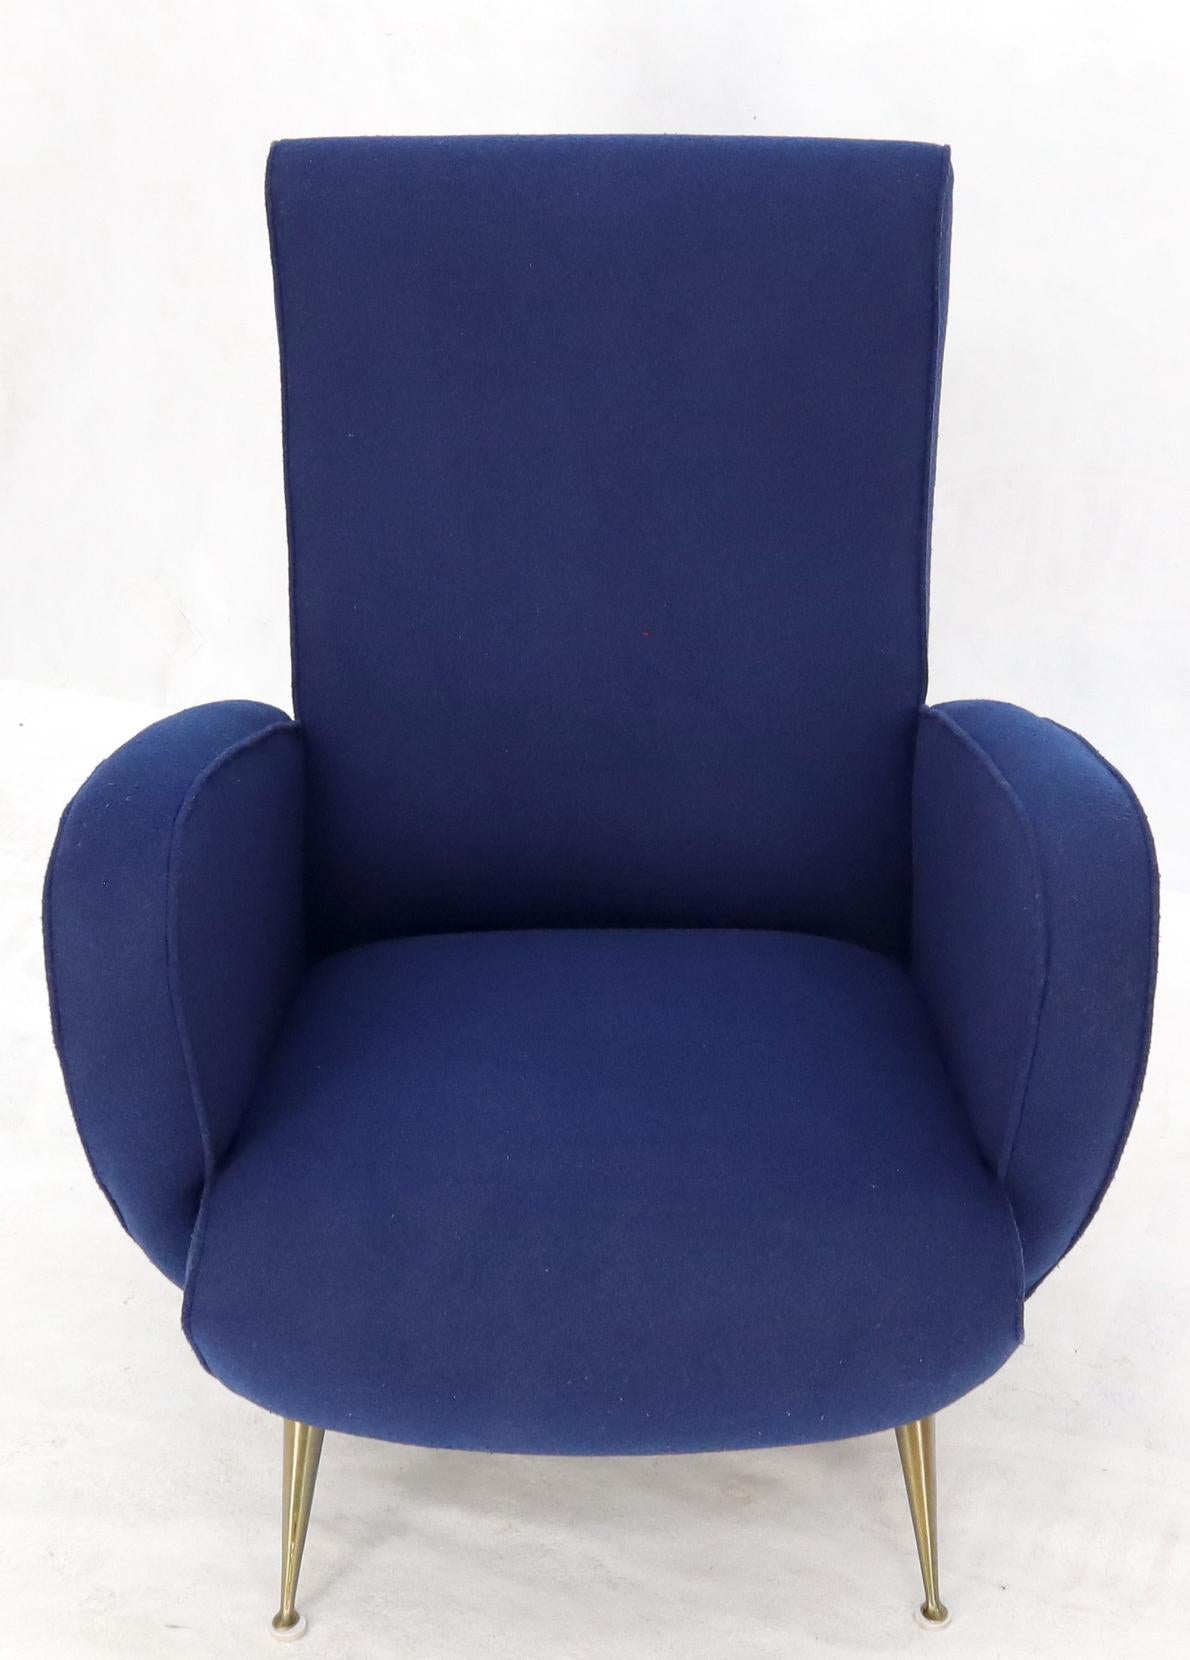 Stunning new navy blue upholstery Italian Mid-Century Modern lounge chair on cone shape brass legs. Paolo Buffa, Gio Ponti decor match.